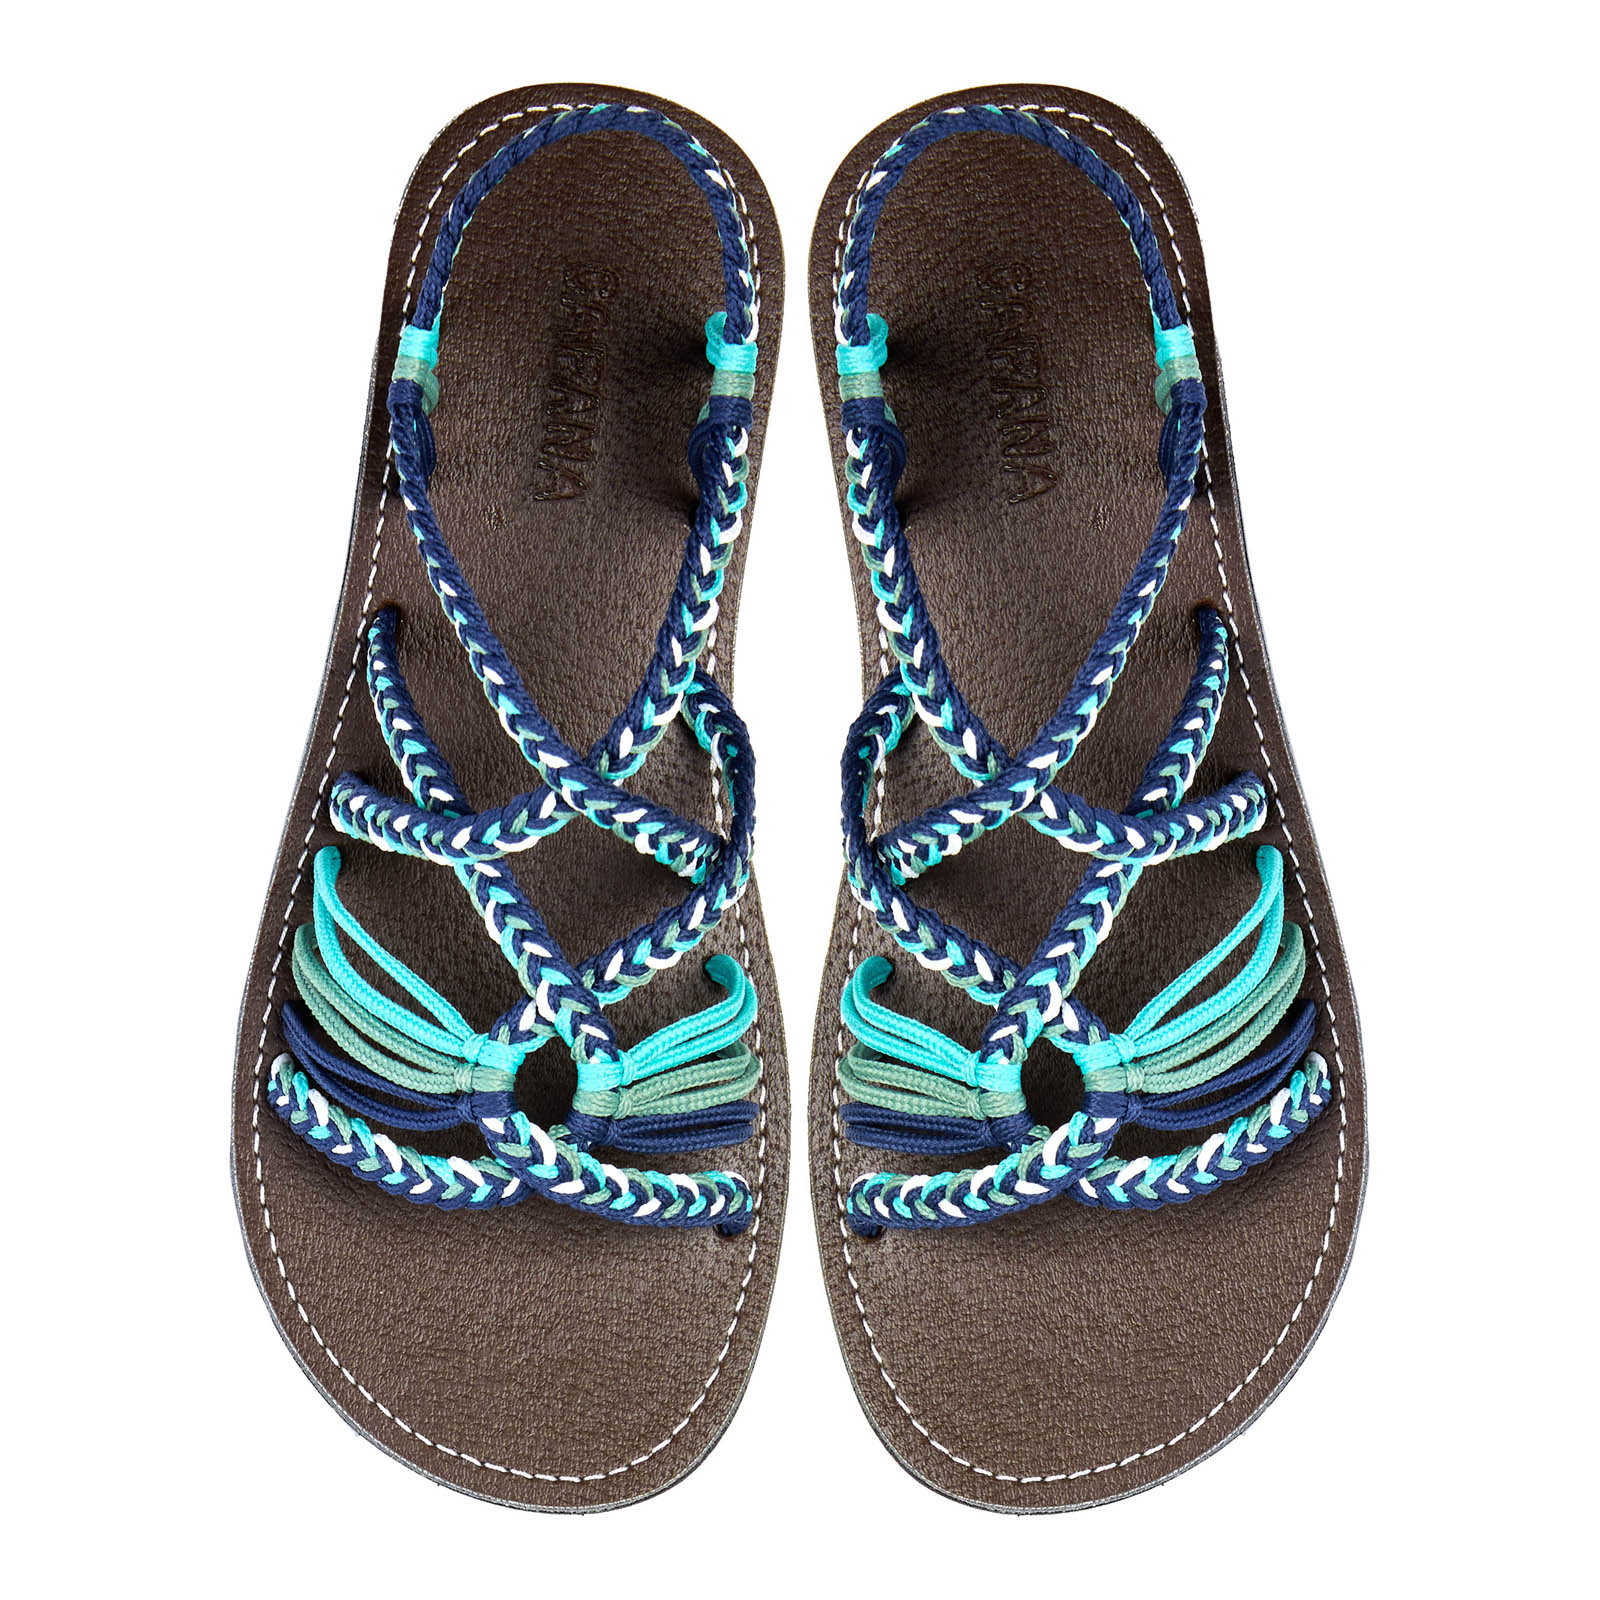 Relax Marine Pistachio Rope Sandals Blue Green Open toe wider design Flat Handmade sandals for women